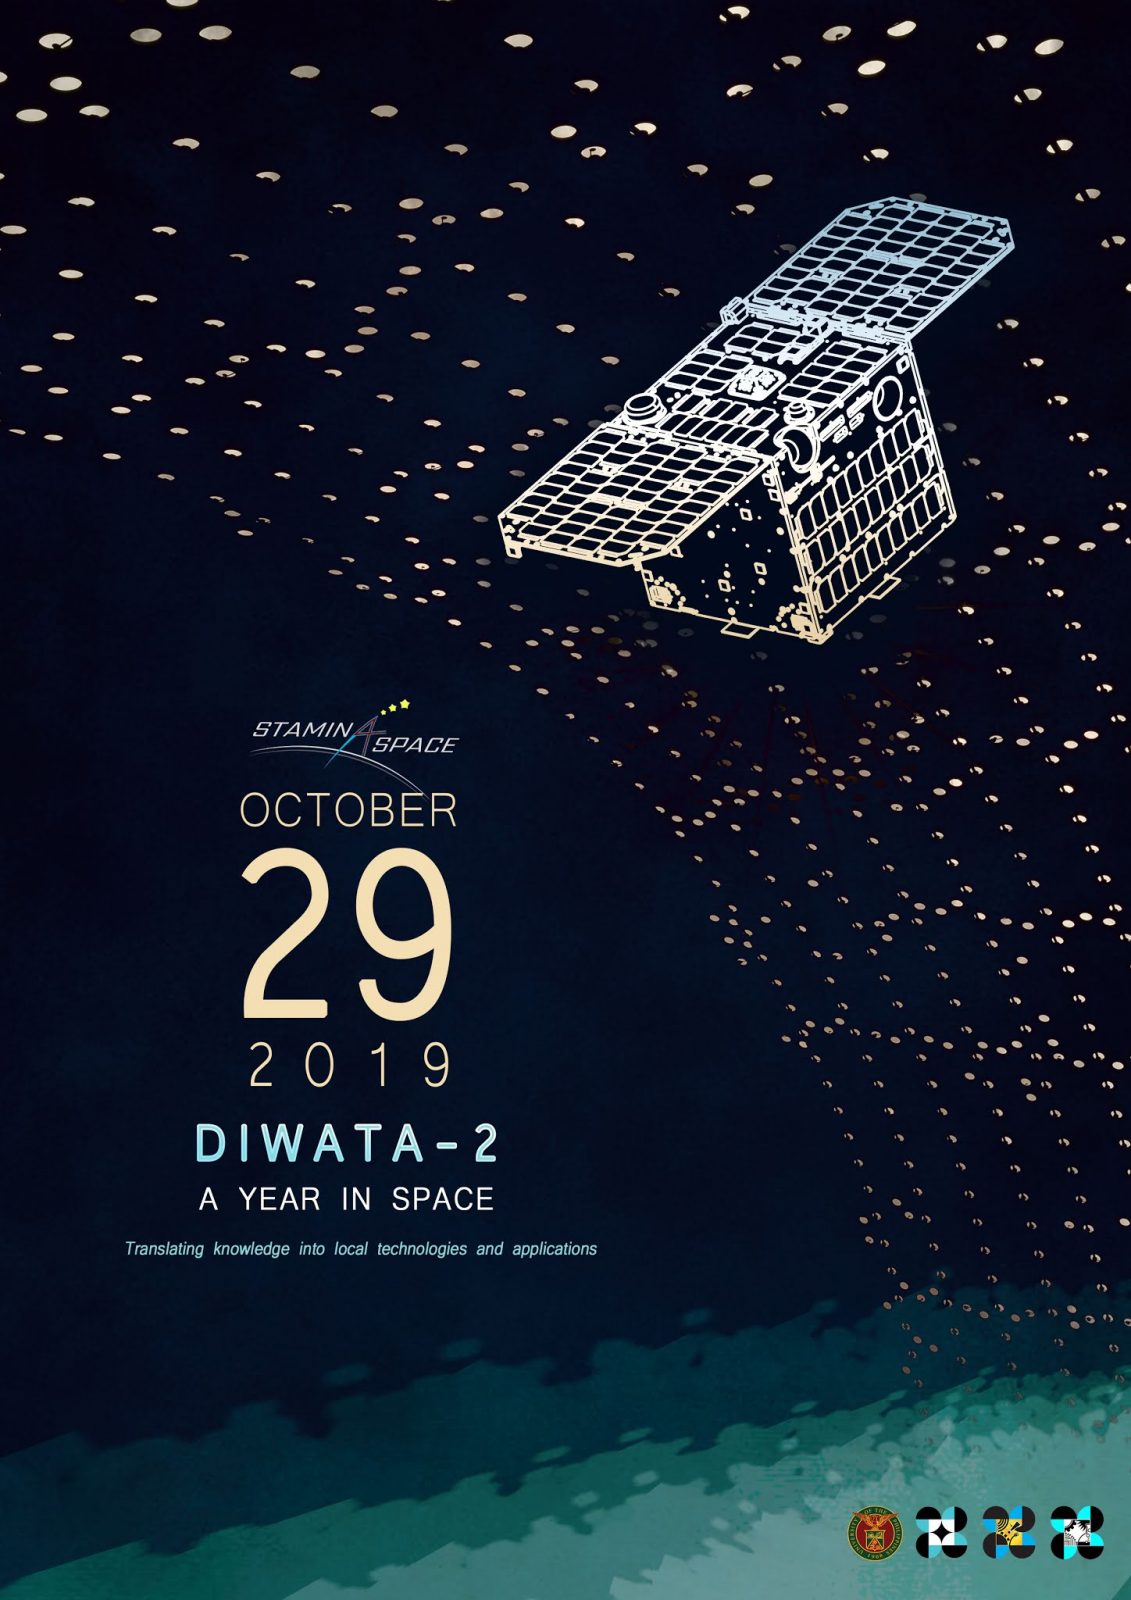 University Philippines Diwata-2 microsatellite